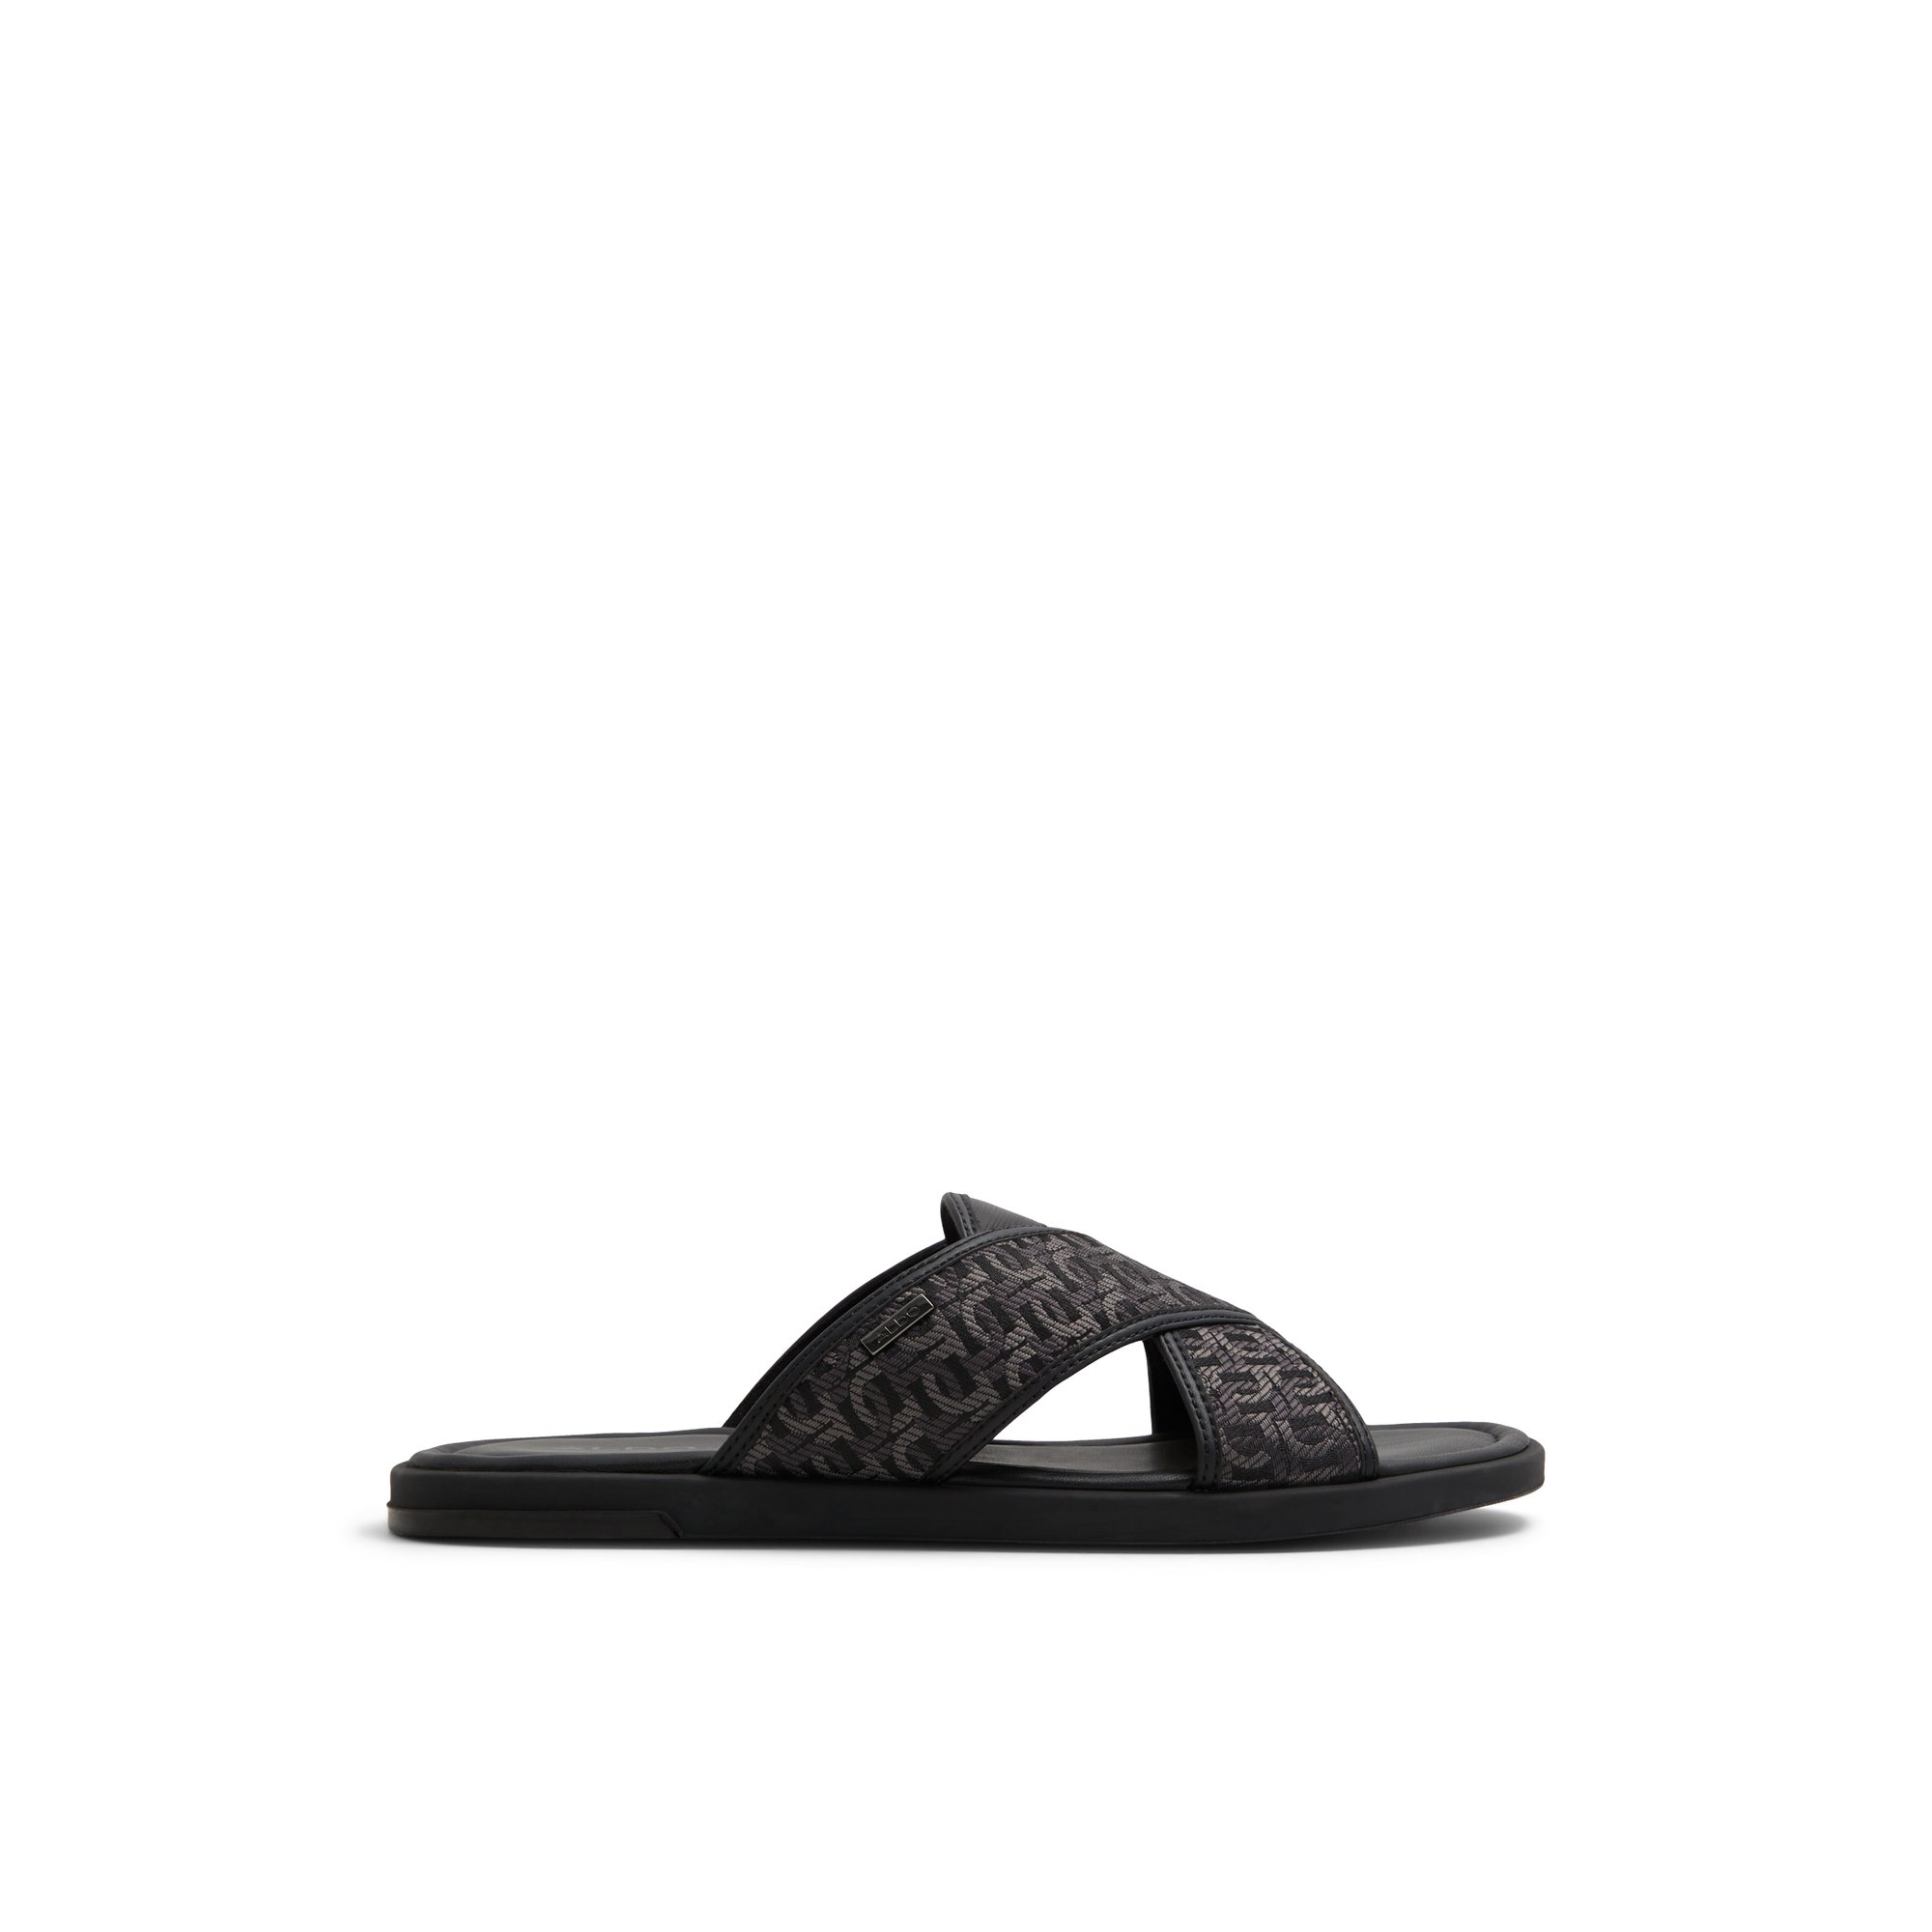 ALDO Olino - Men's Sandals - Black